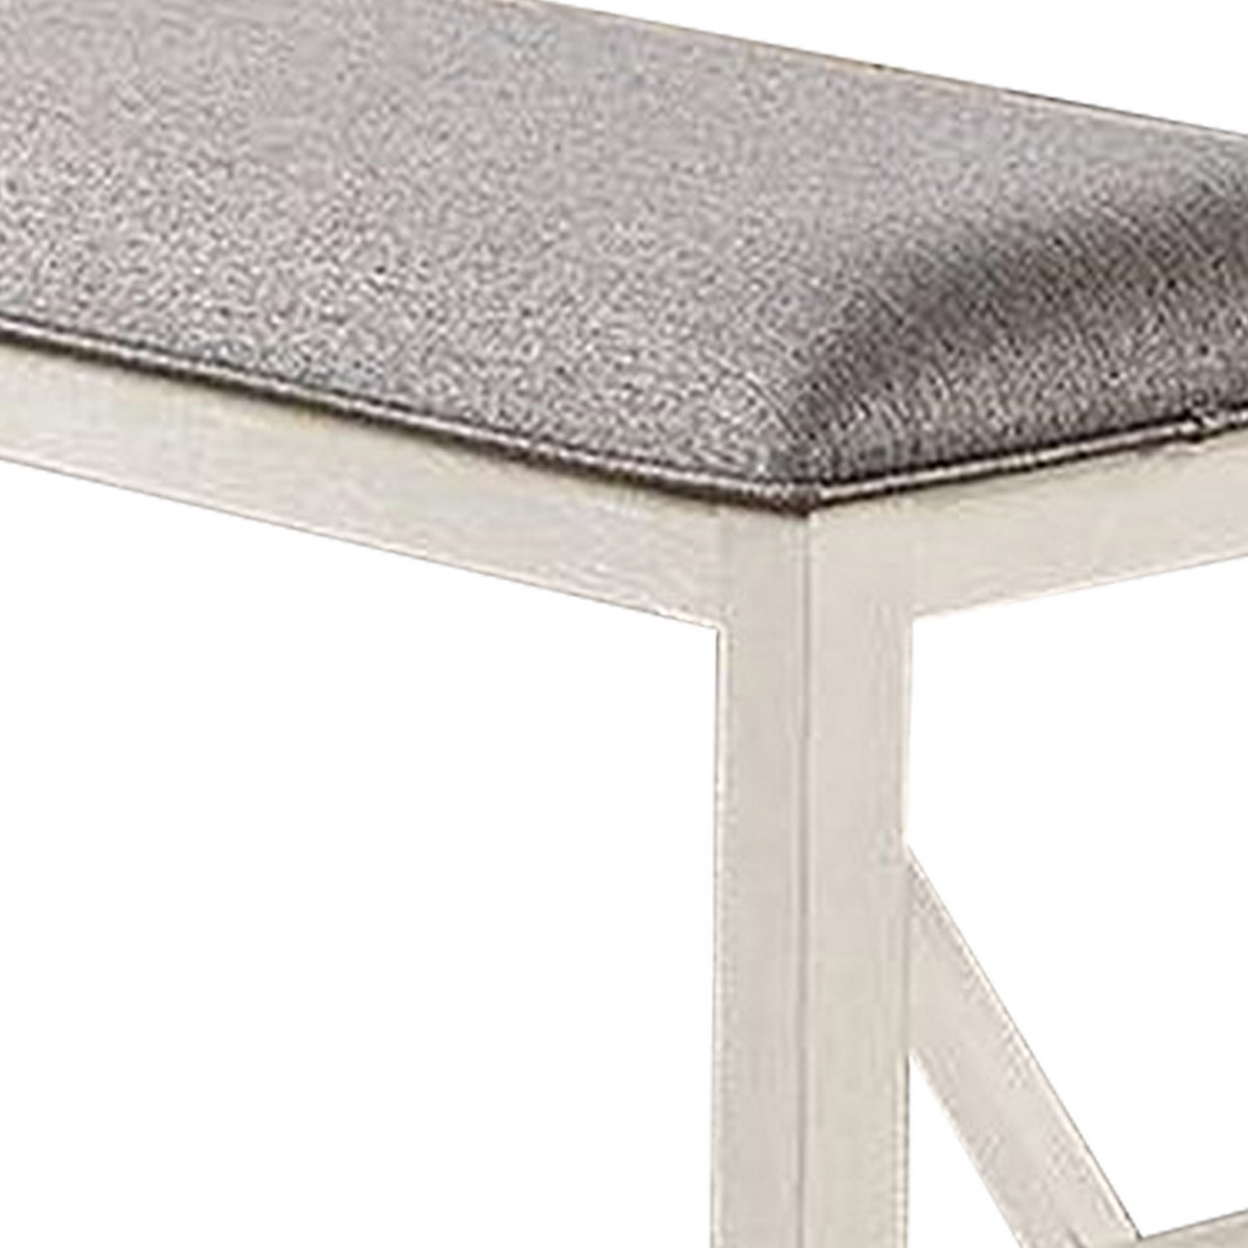 Lexi 50 Inch Dining Bench, Fabric Padded Seat, Rubberwood, Gray And White- Saltoro Sherpi